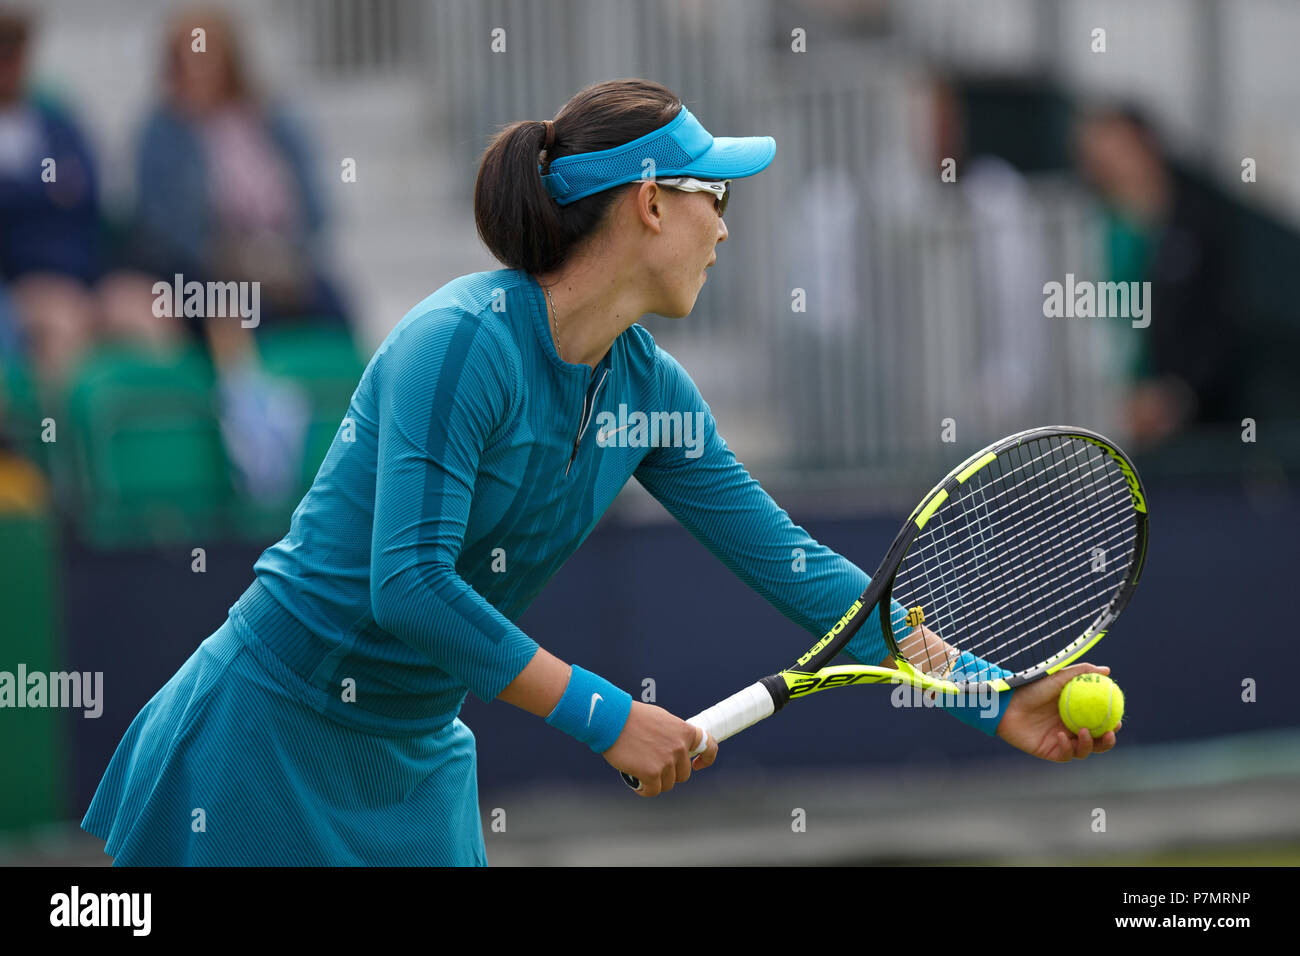 Professional tennis player Saisai Zheng (Zheng Saisai) preparing to serve during a match. Stock Photo